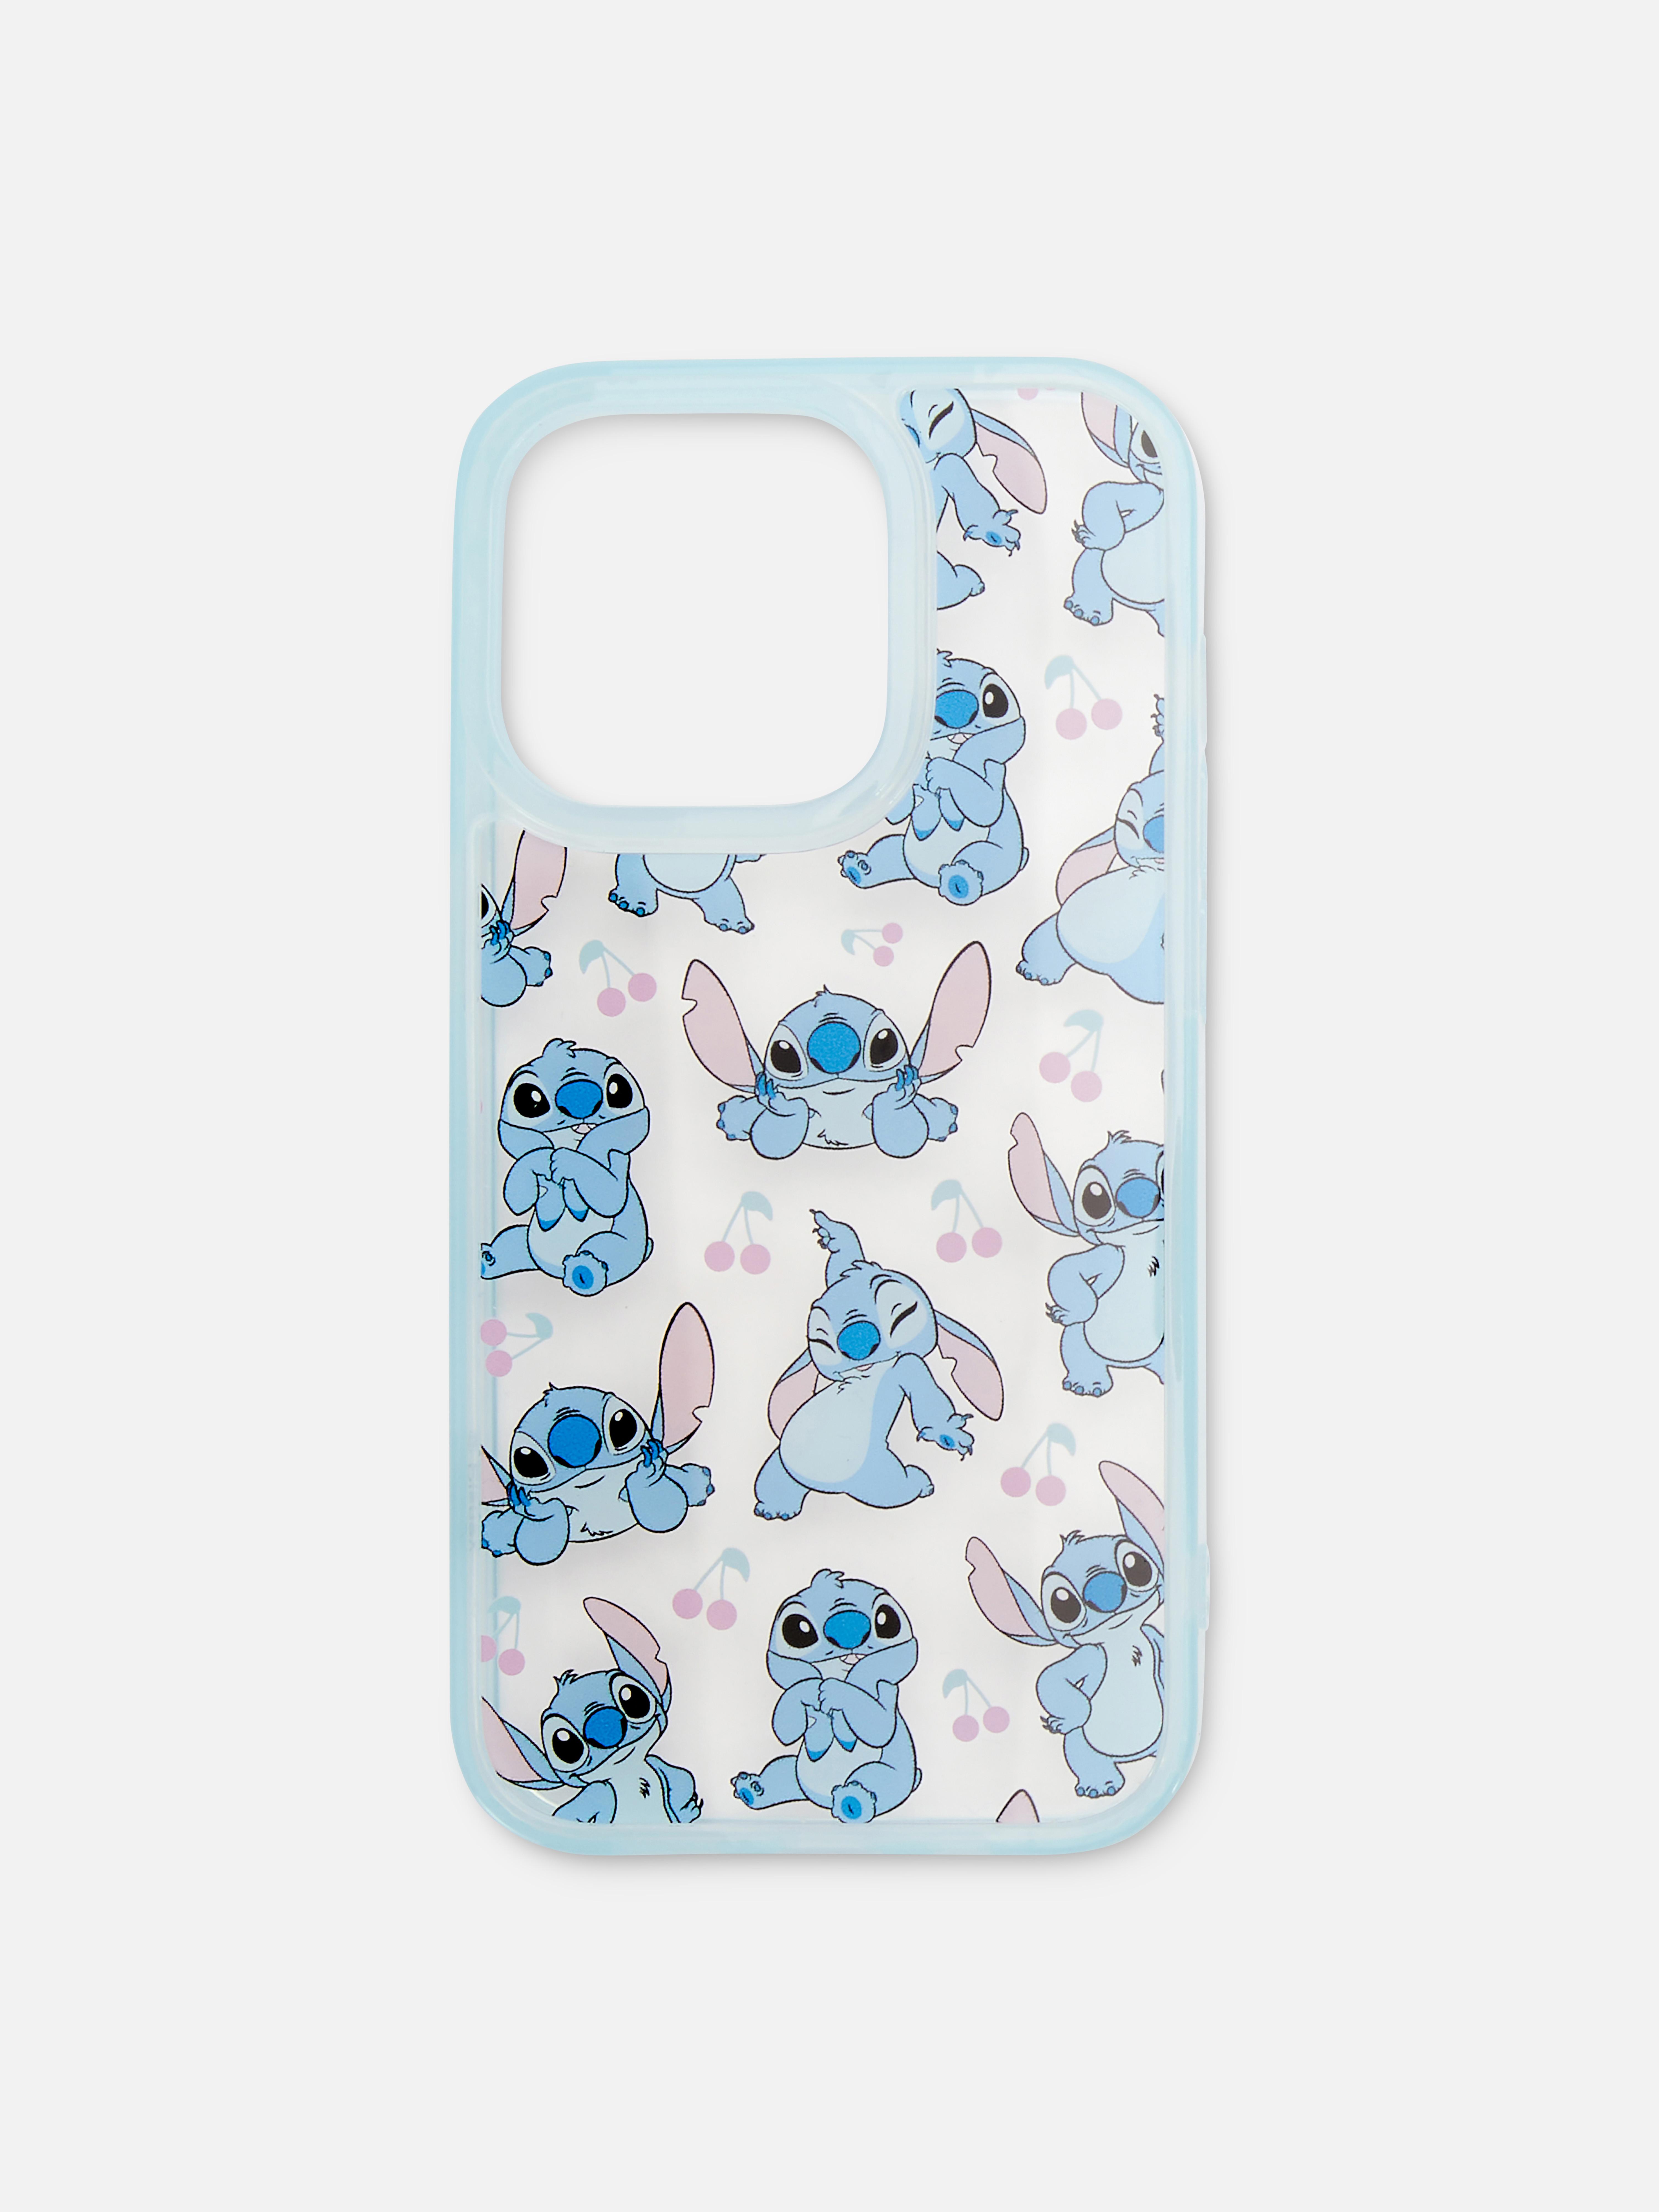 Capa telemóvel Disney Lilo & Stitch